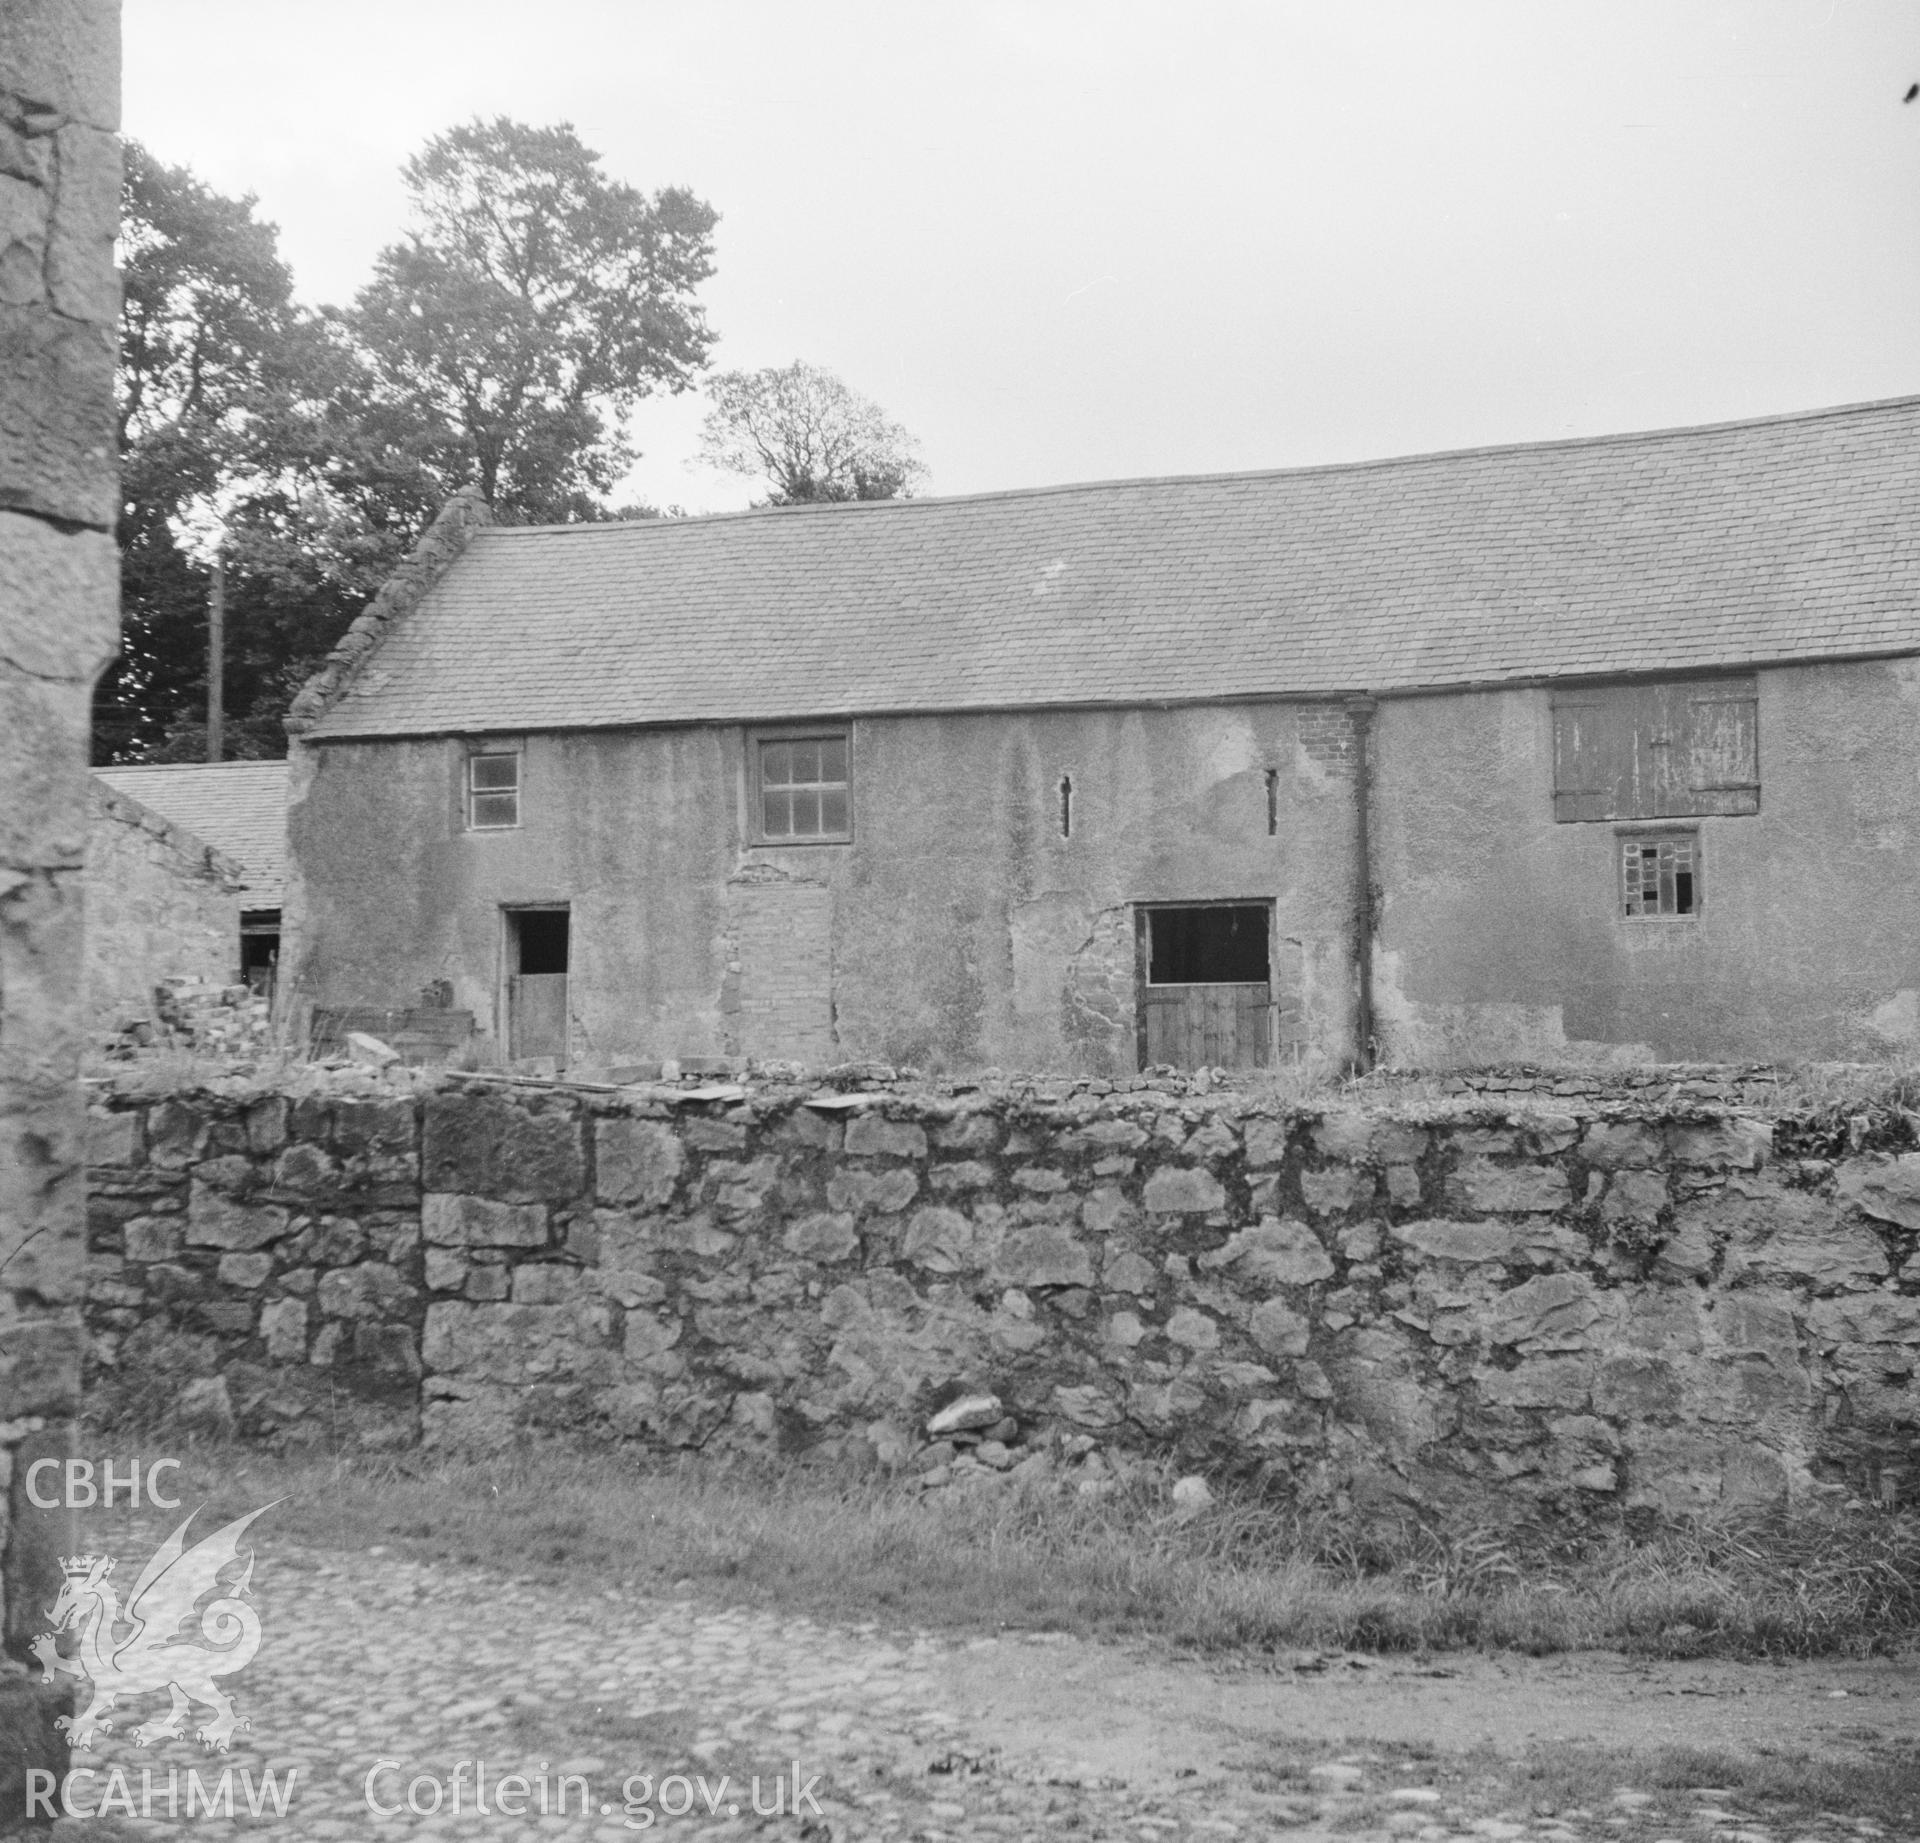 Digital copy of an undated nitrate negative showing view of estate buildings at Bodrhyddan Hall, Rhuddlan, Flintshire.